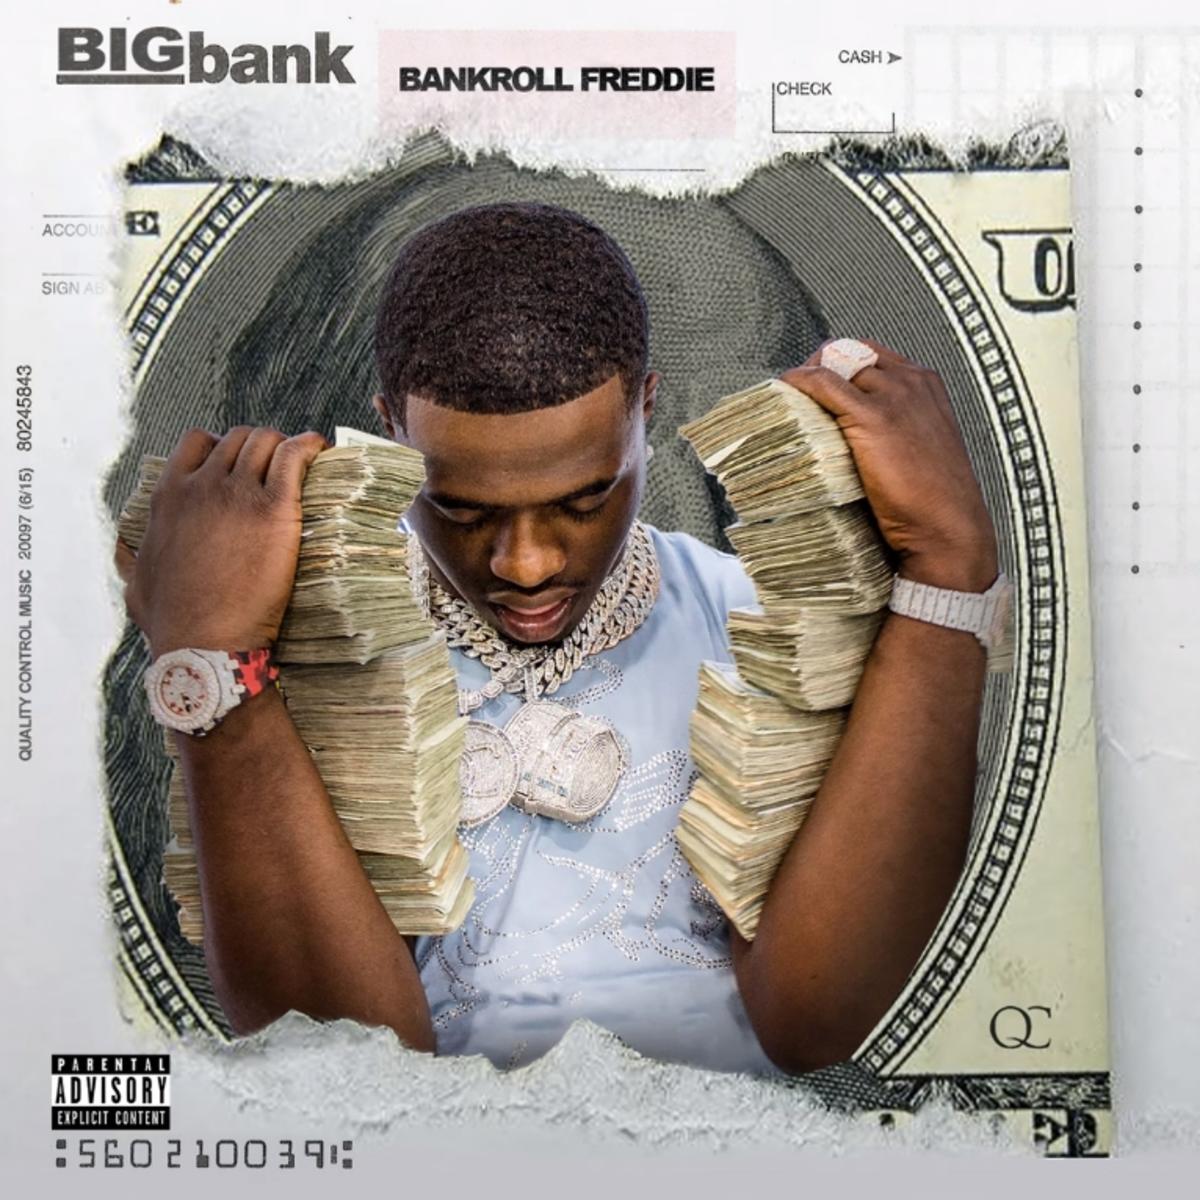 Listen To “Big Bank” By Bankroll Freddie